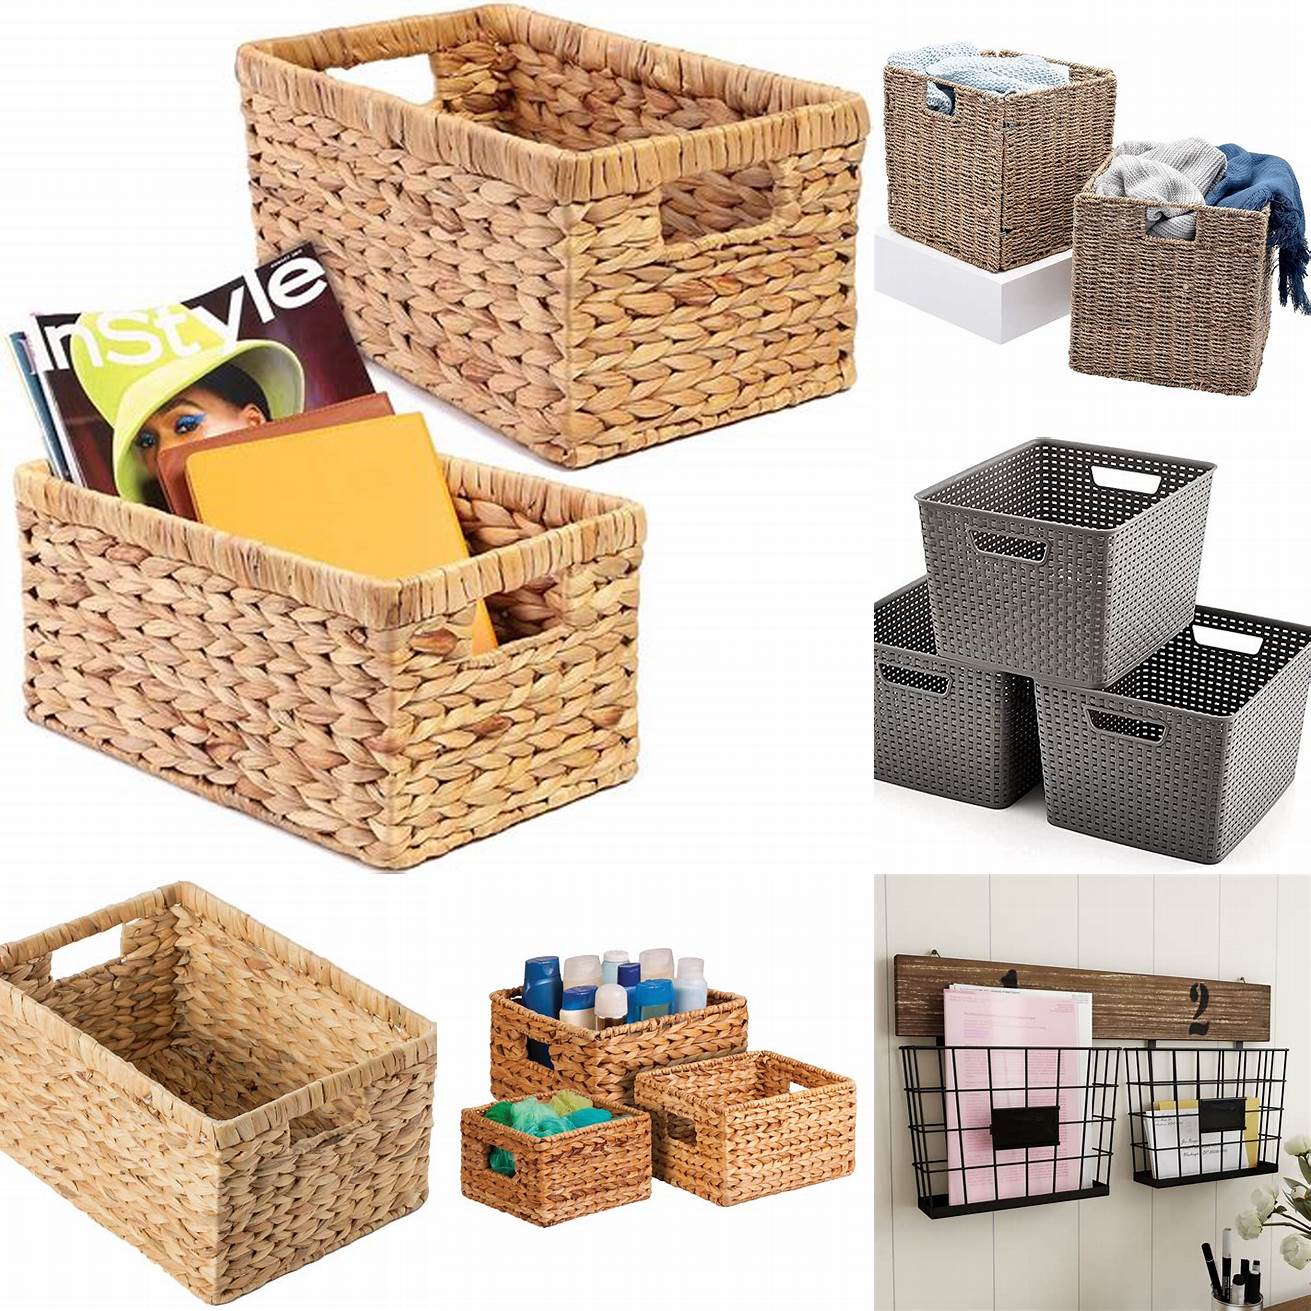 Baskets and bins